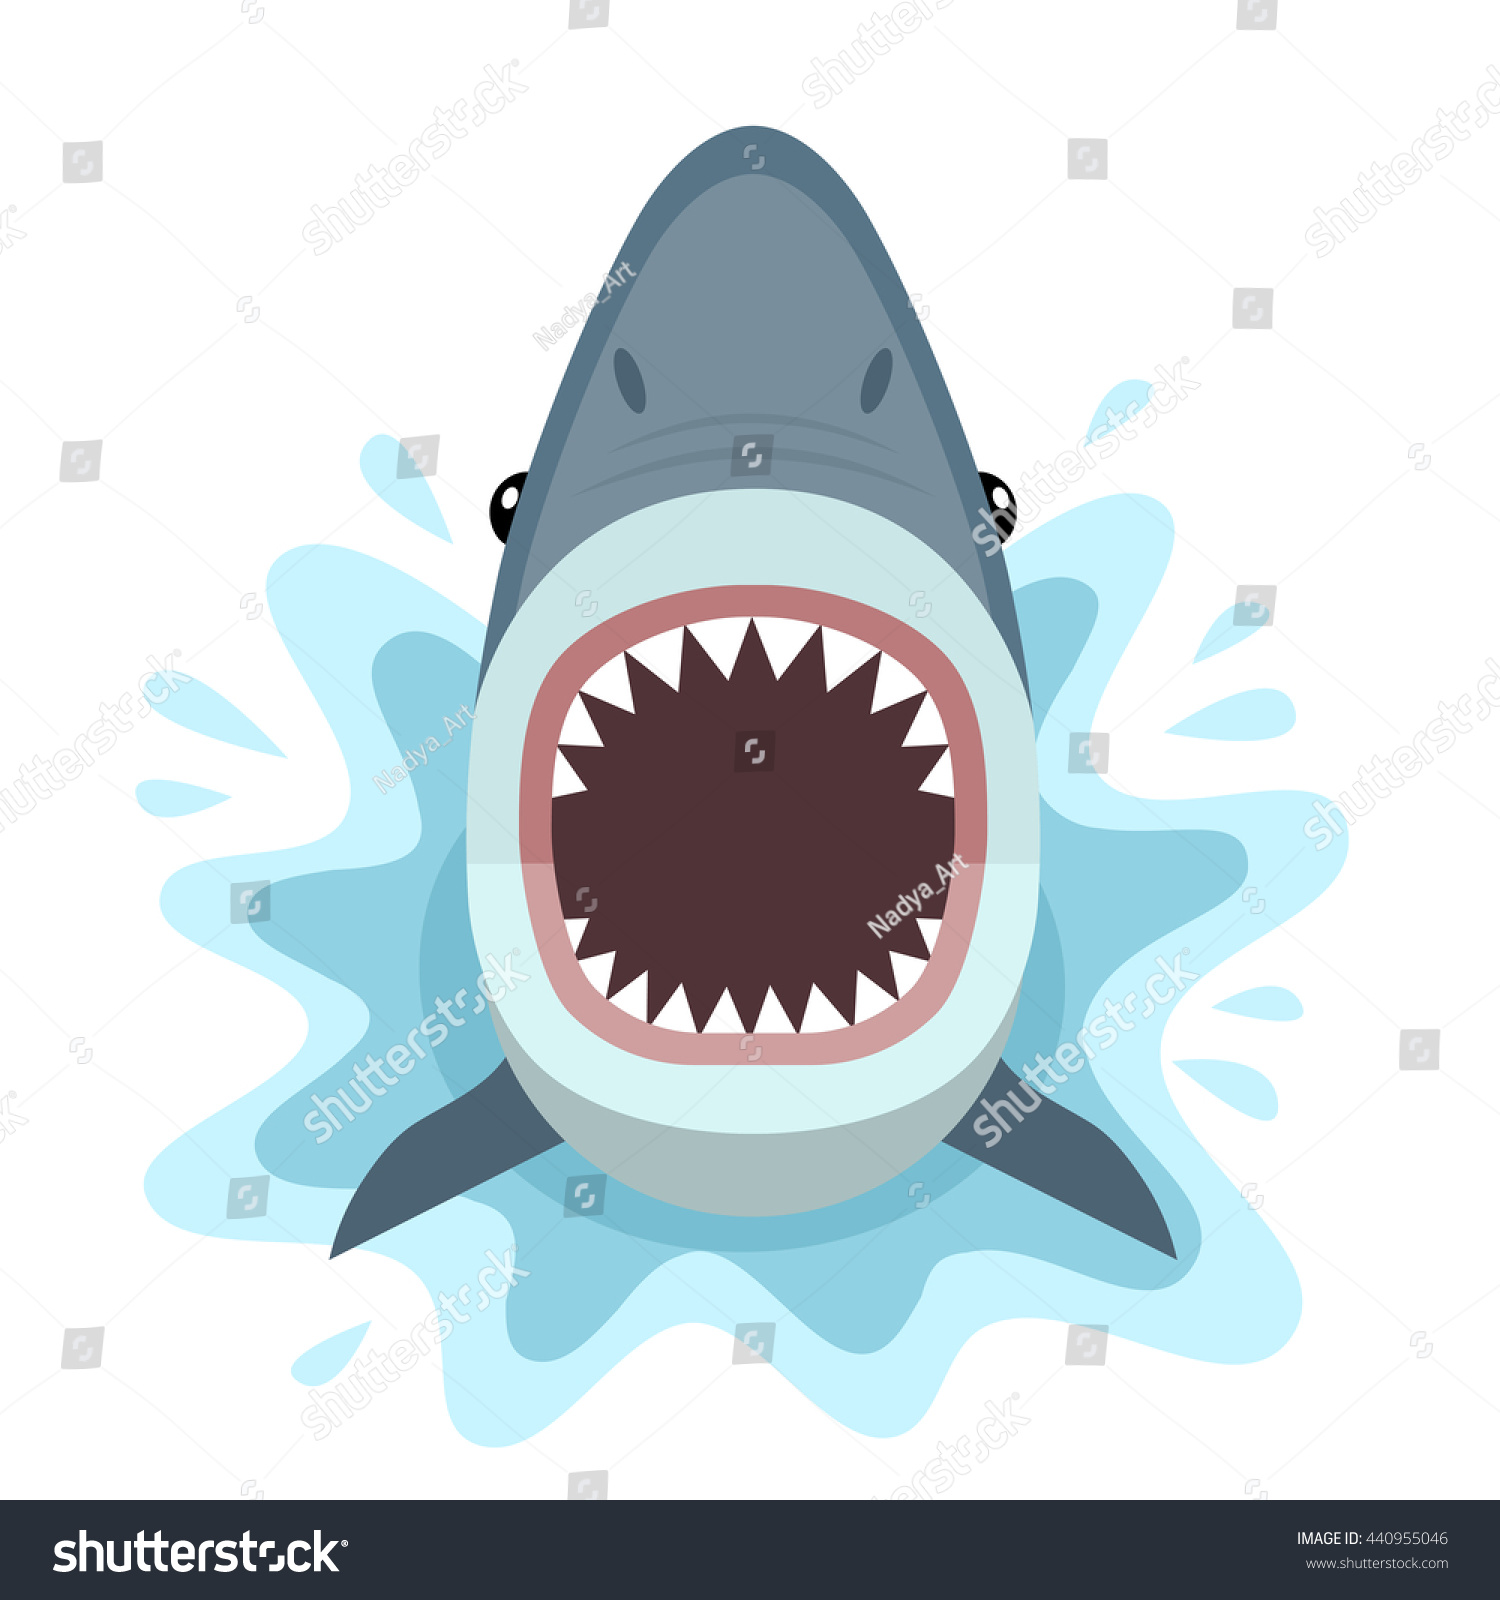 Download Vector Illustration Shark Open Mouth Full Stock Vector ...